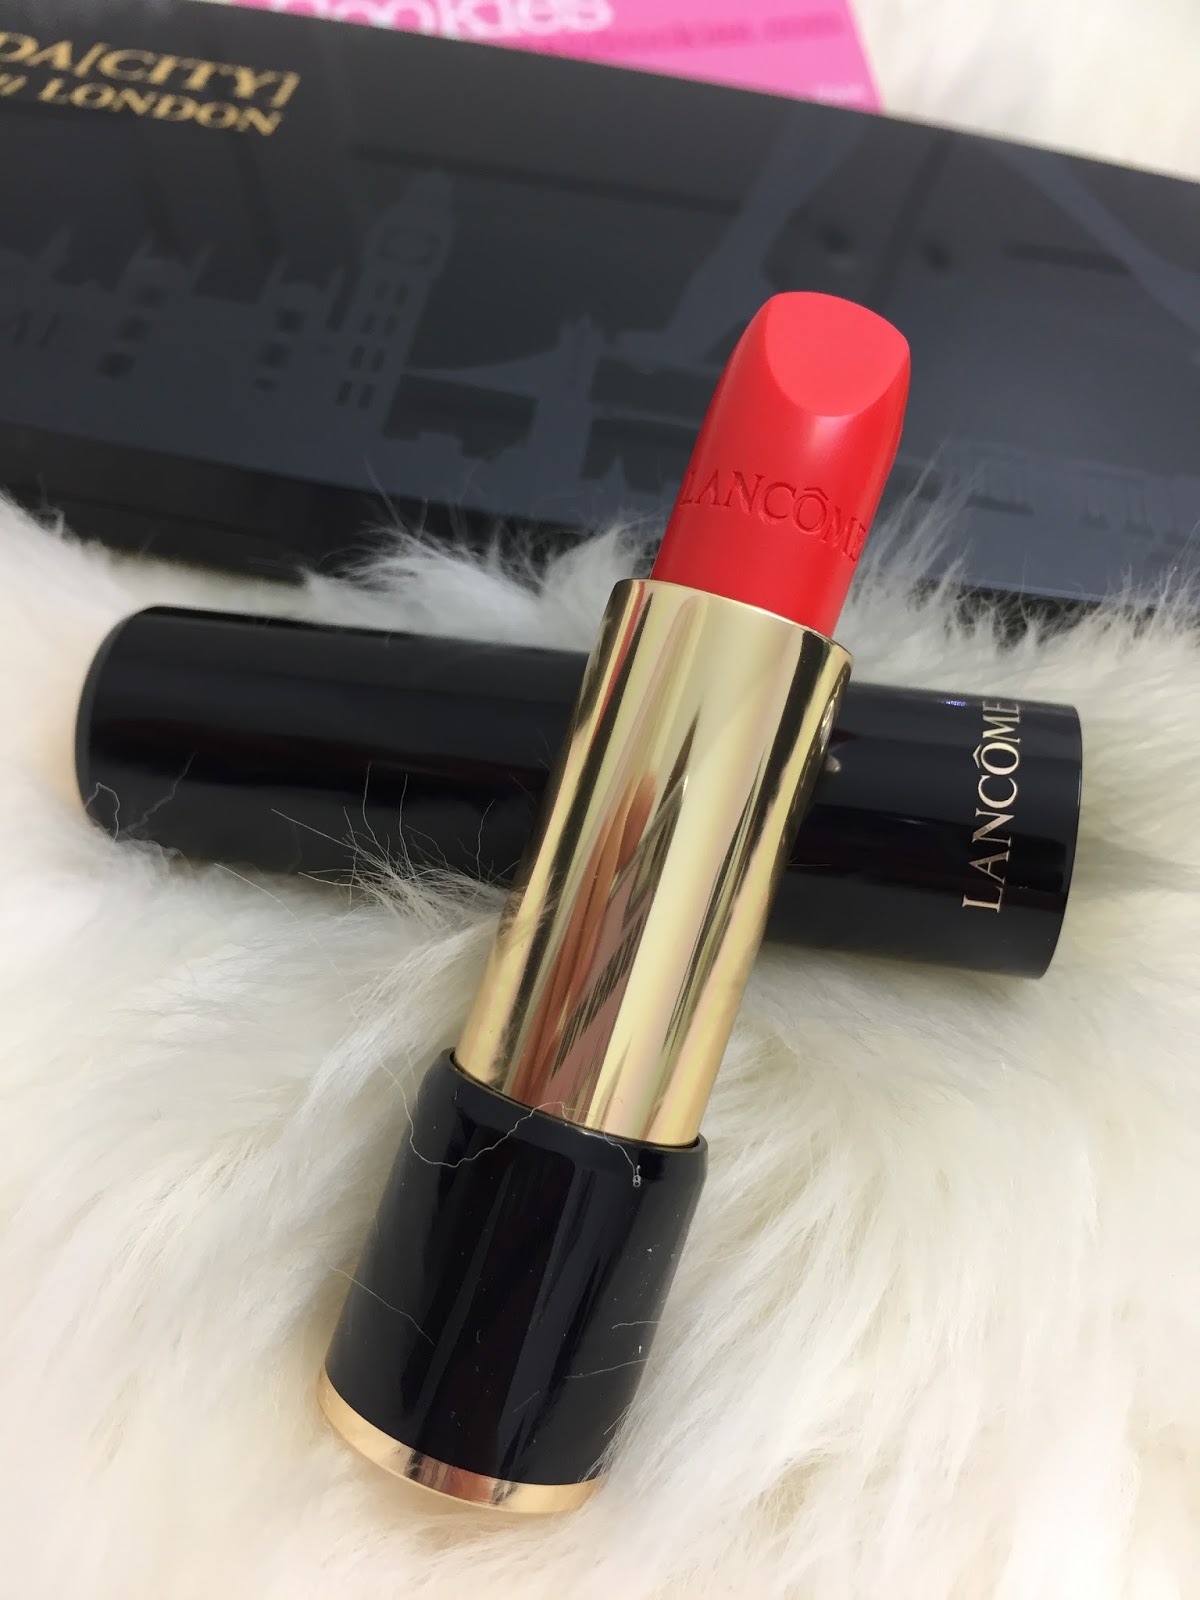 Lancome L'Absolu Rouge lipstick by Lisa Eldridge on Fashion and Cookies beauty blog, beauty blogger